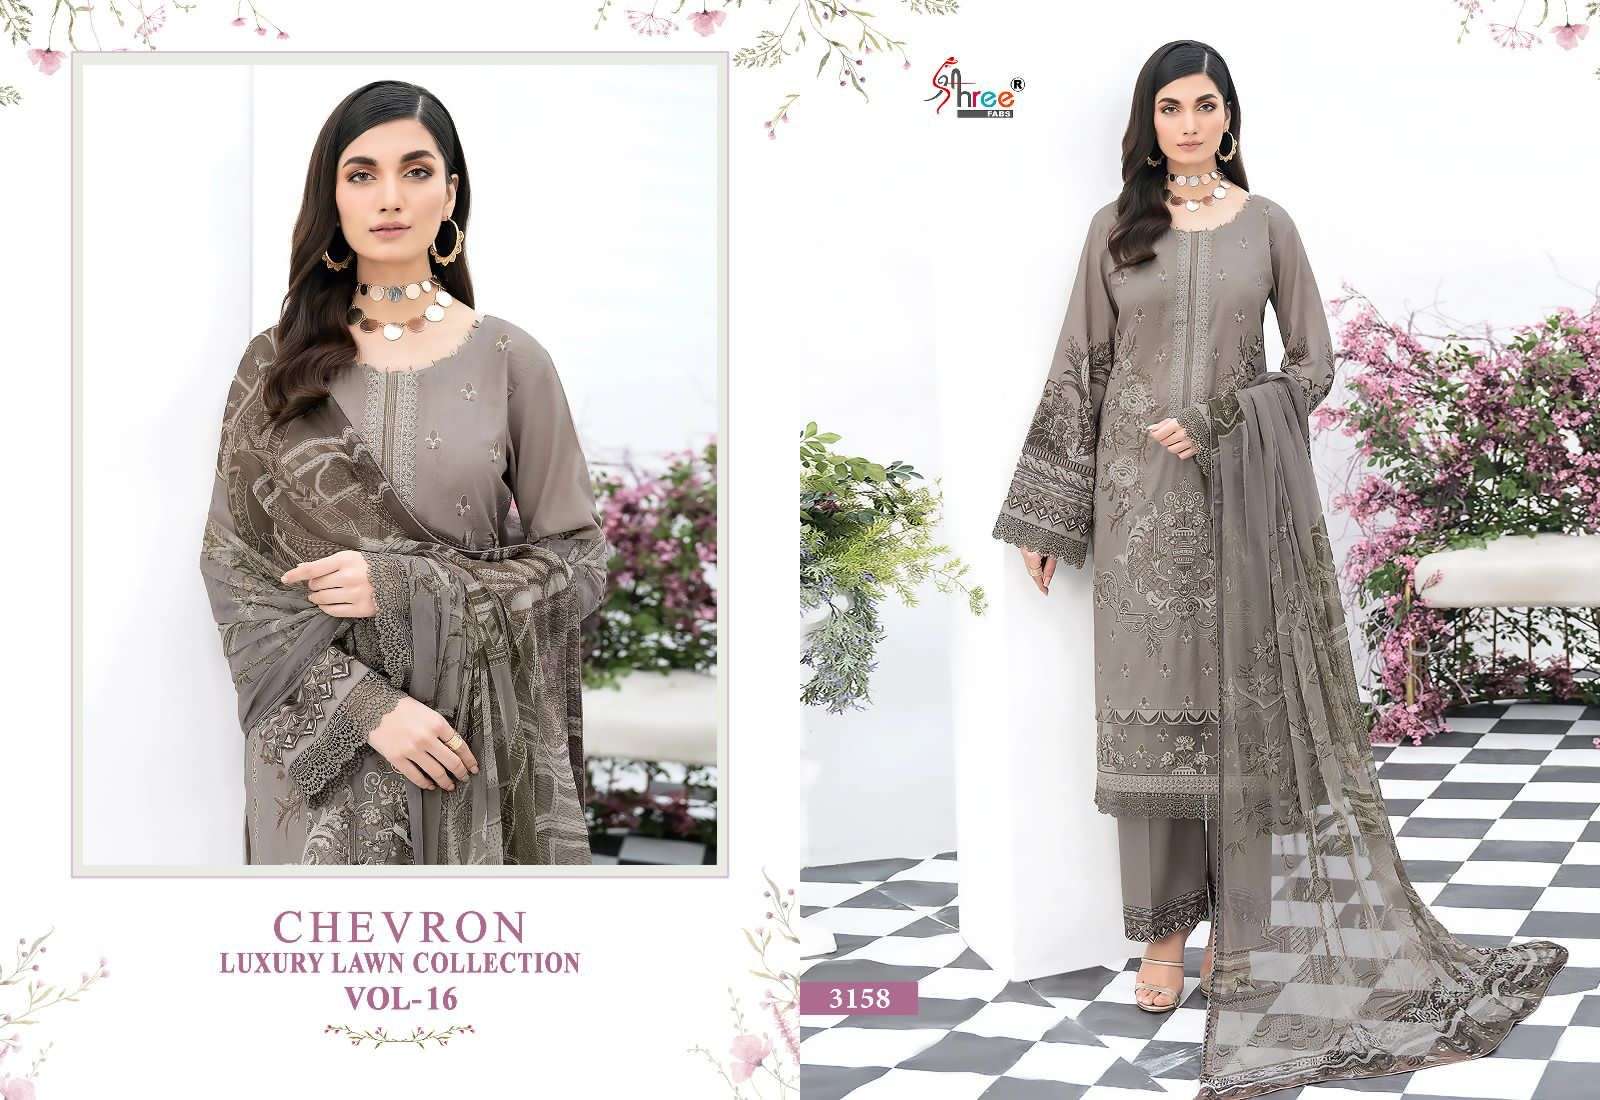 Shree Chevron Luxury Lawn Collection Vol 16 Chiffon Dupatta Pakistani Suit Wholesale catalog